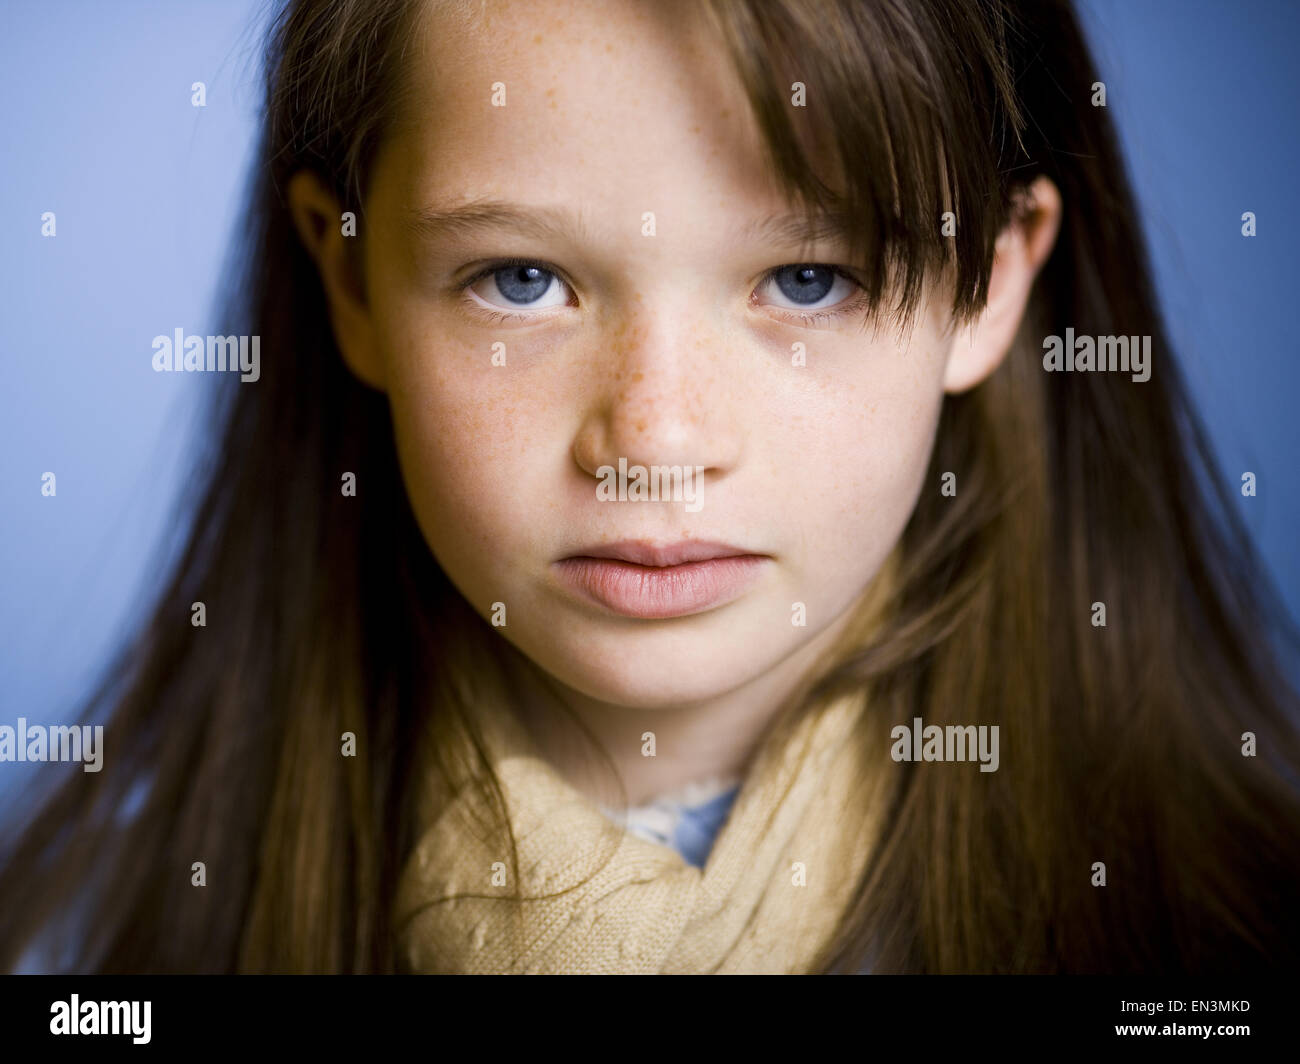 Closeup of girl pouting Stock Photo